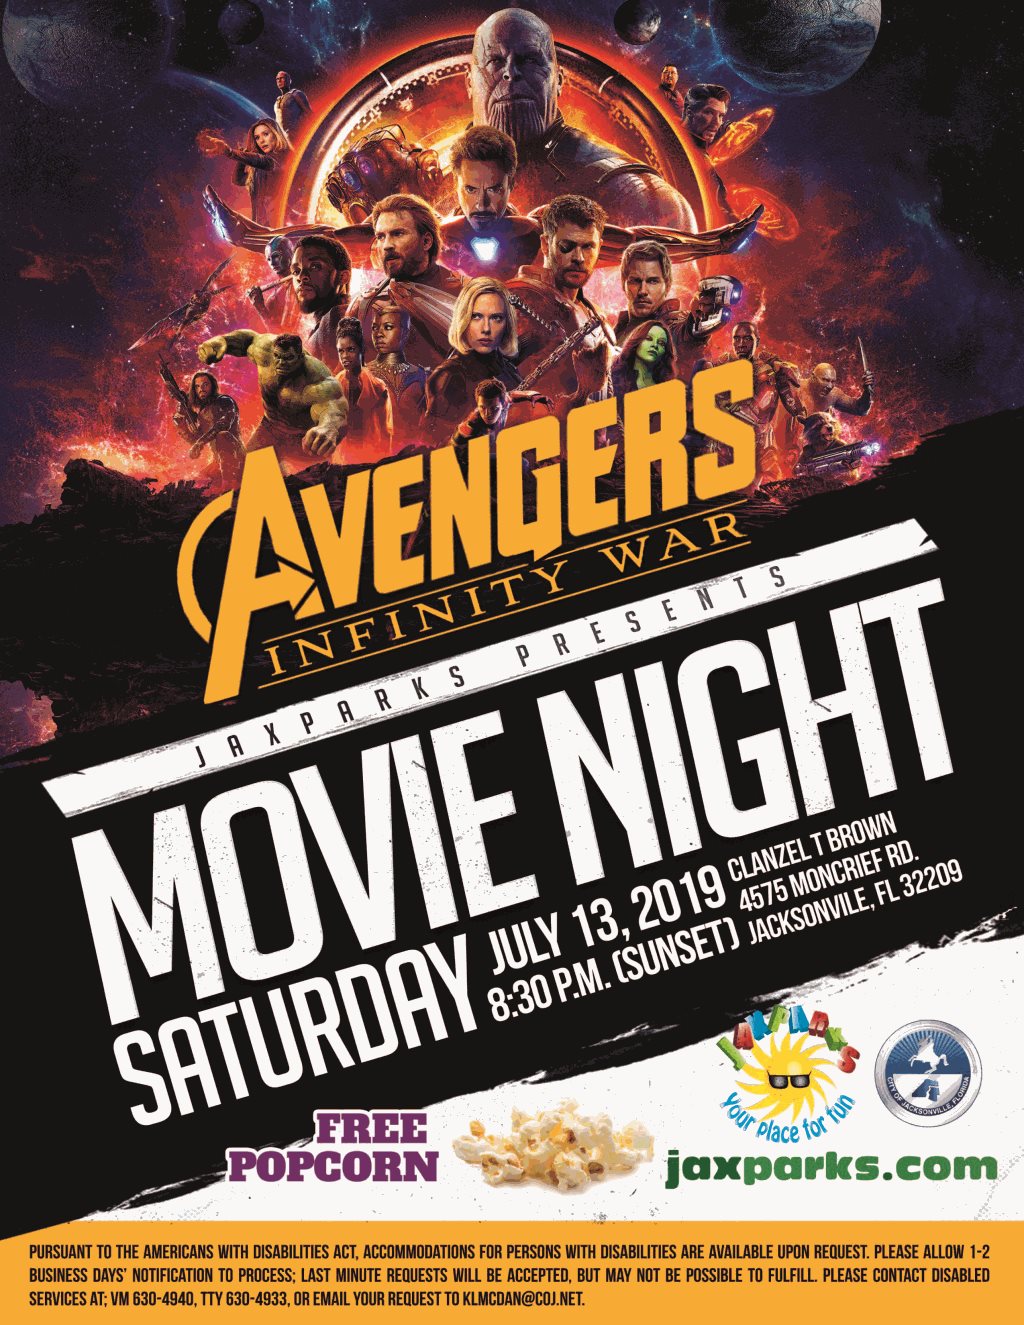 jaxparks movie night flyer for avengers infinity war